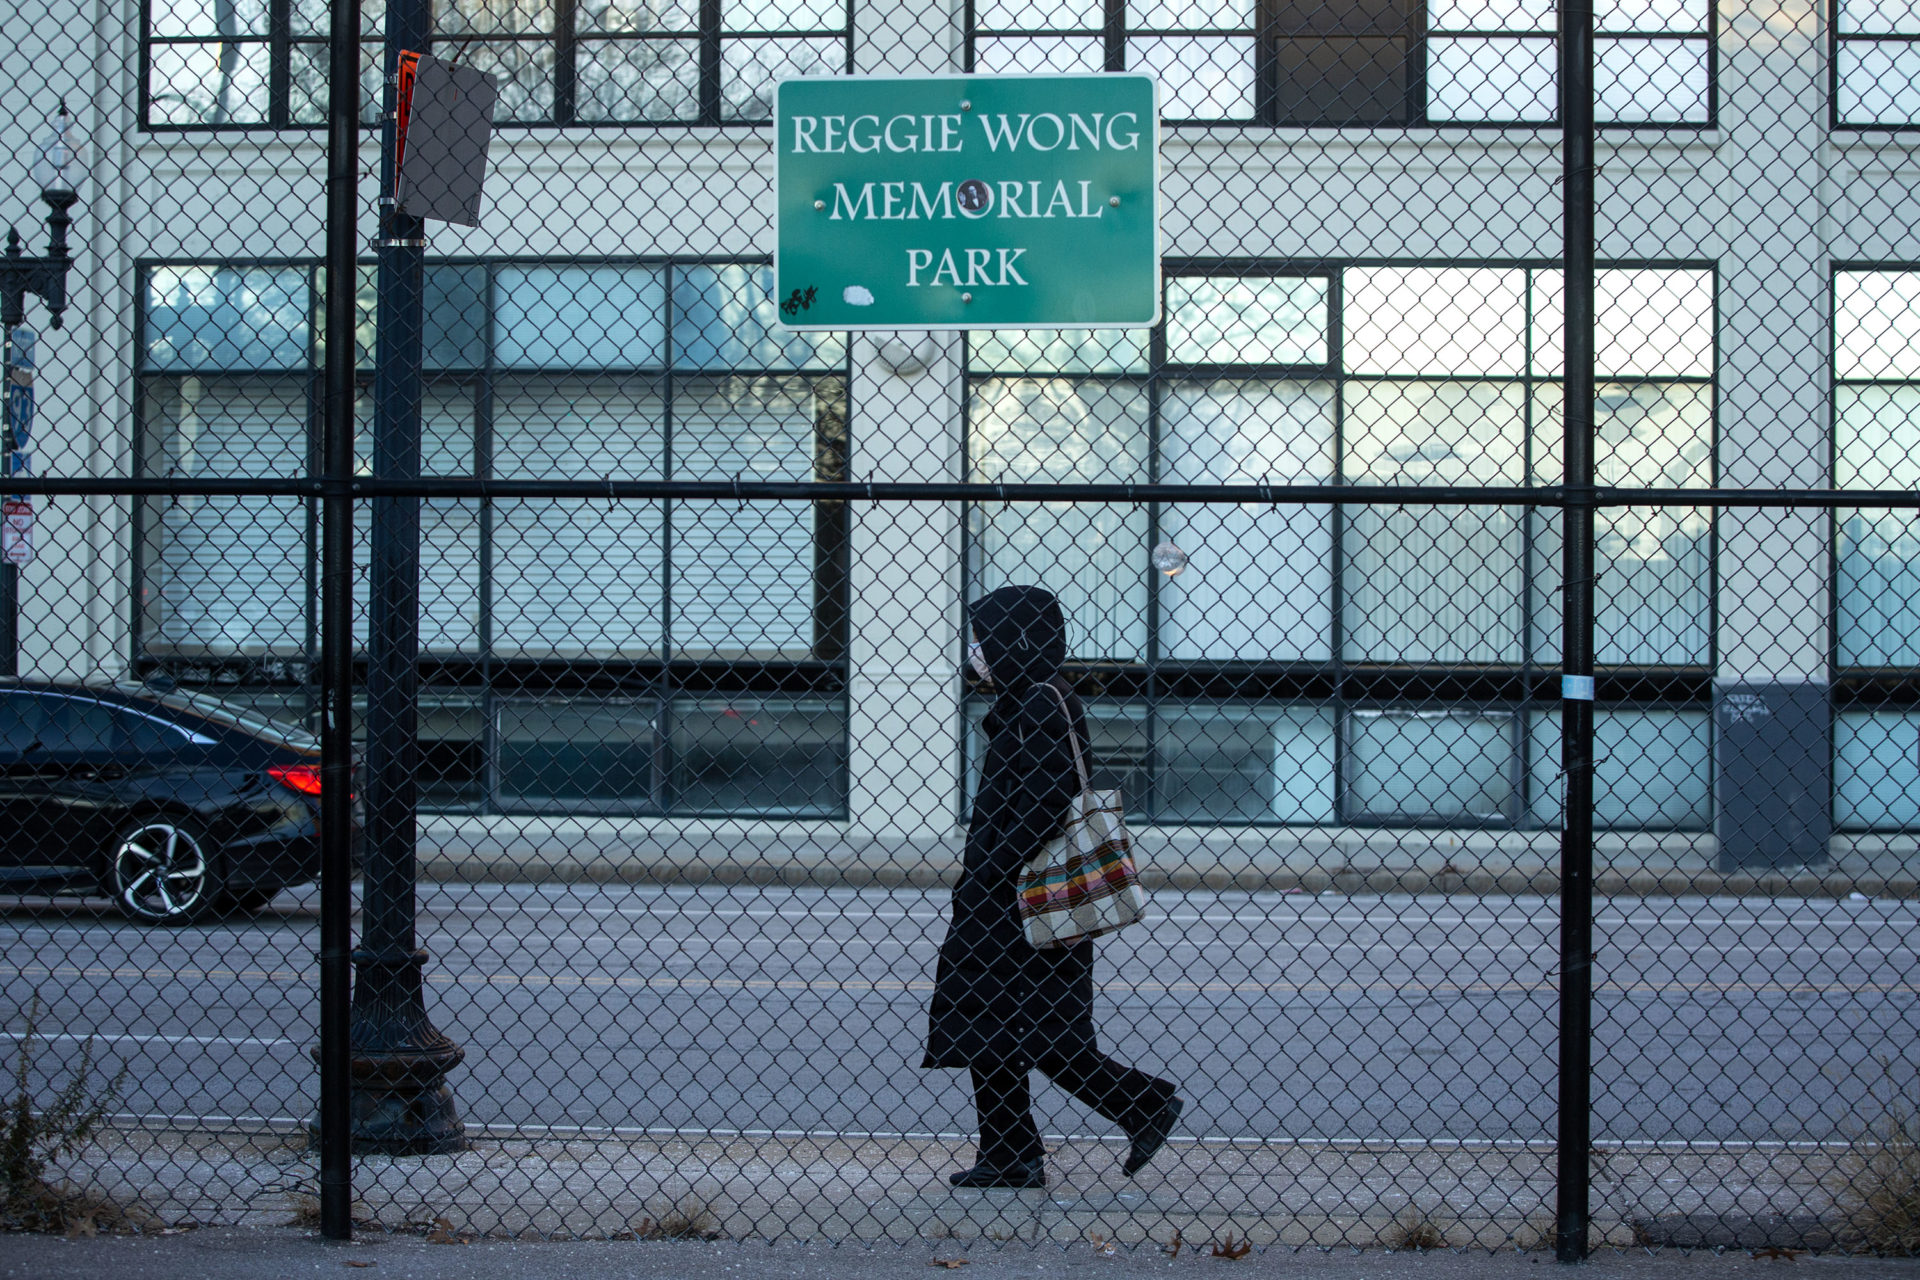 A sign for the Reggie Wong Memorial Park on Kneeland Street, Boston. 